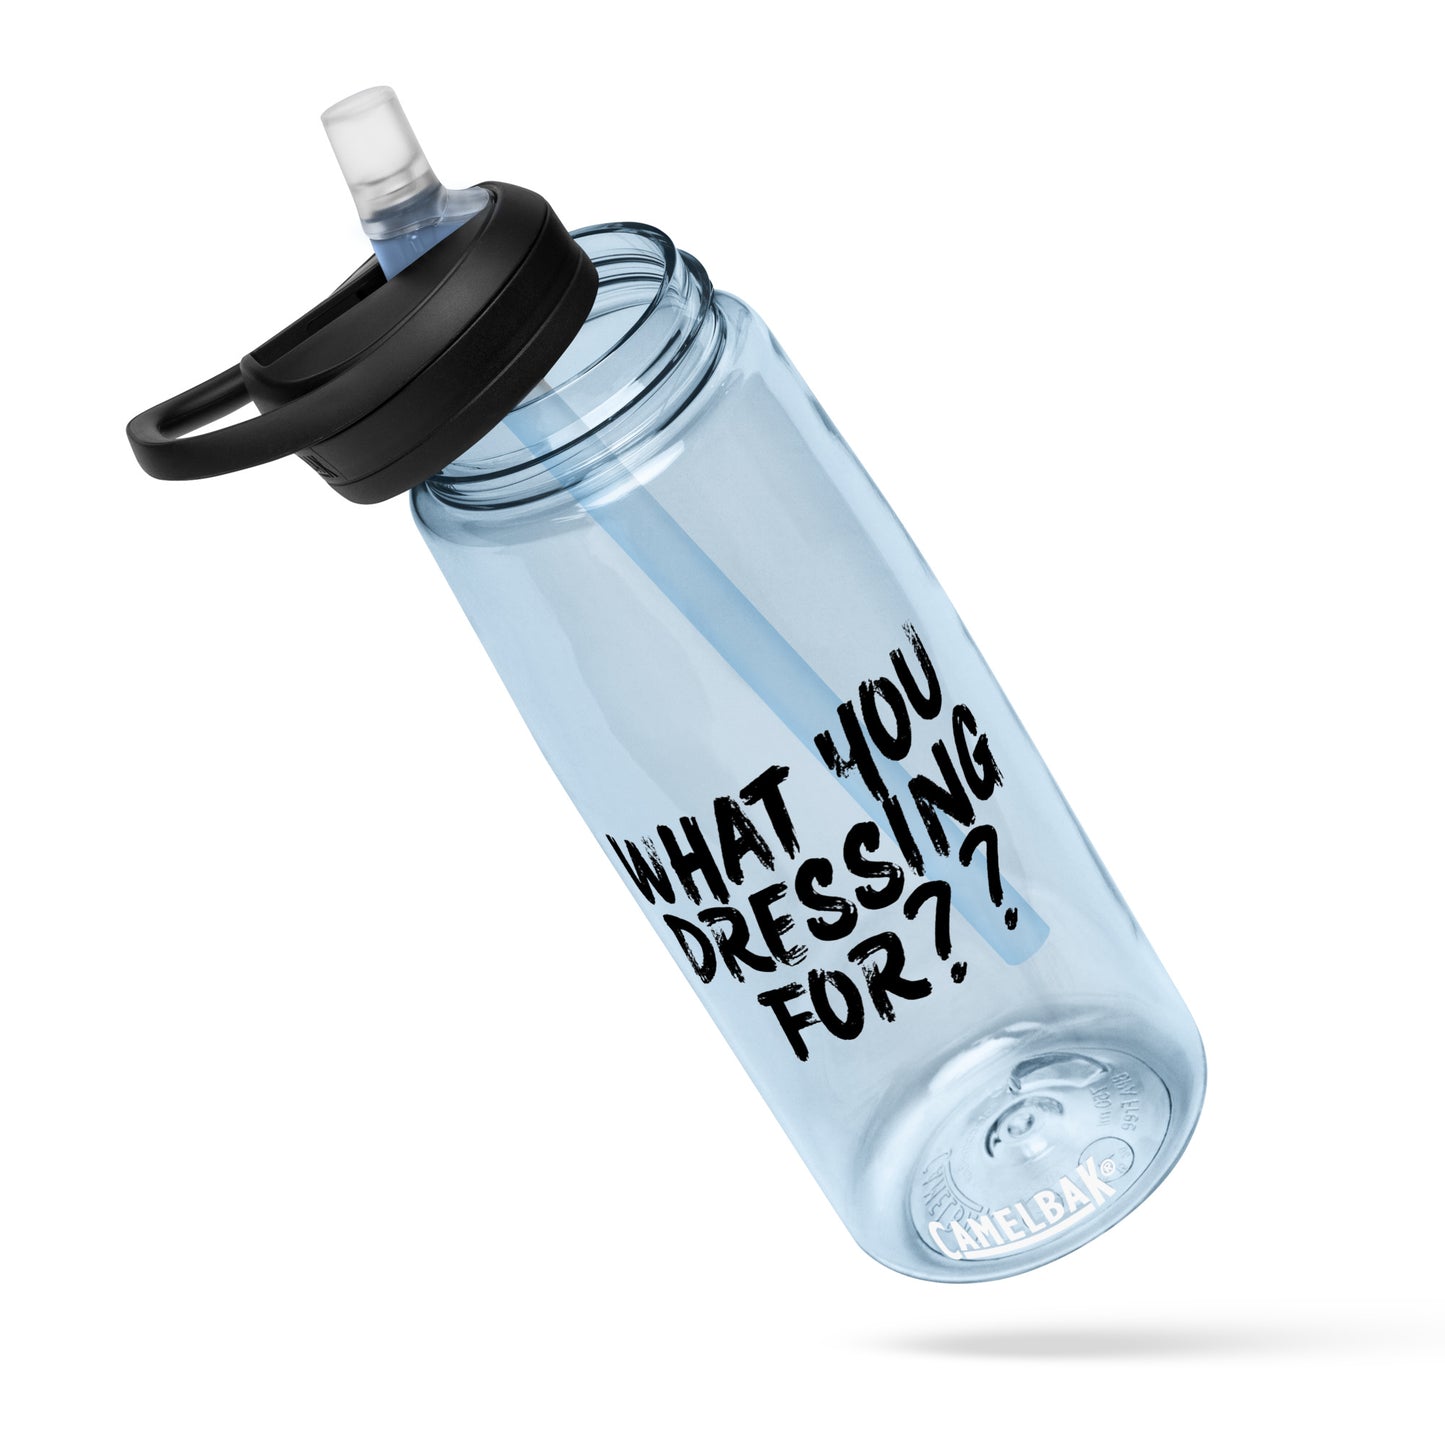 Sports "WYDF?" water bottle